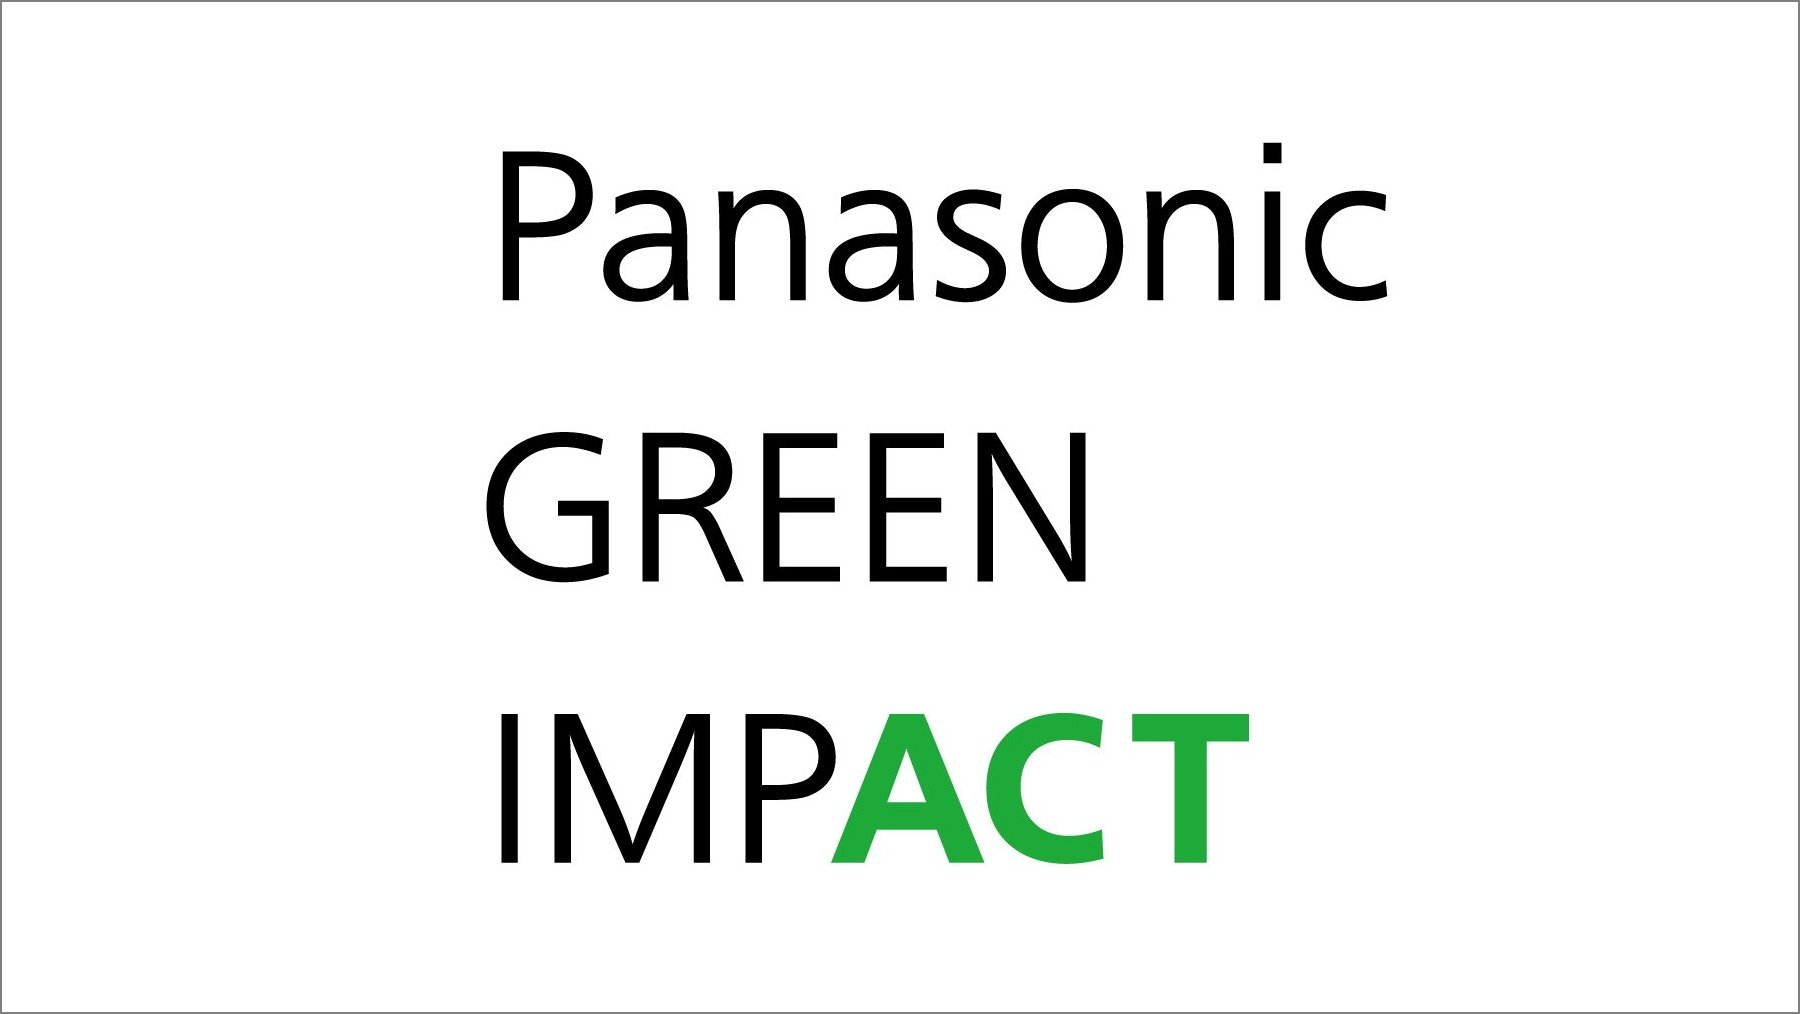 「Panasonic GREEN IMPACT」のロゴ